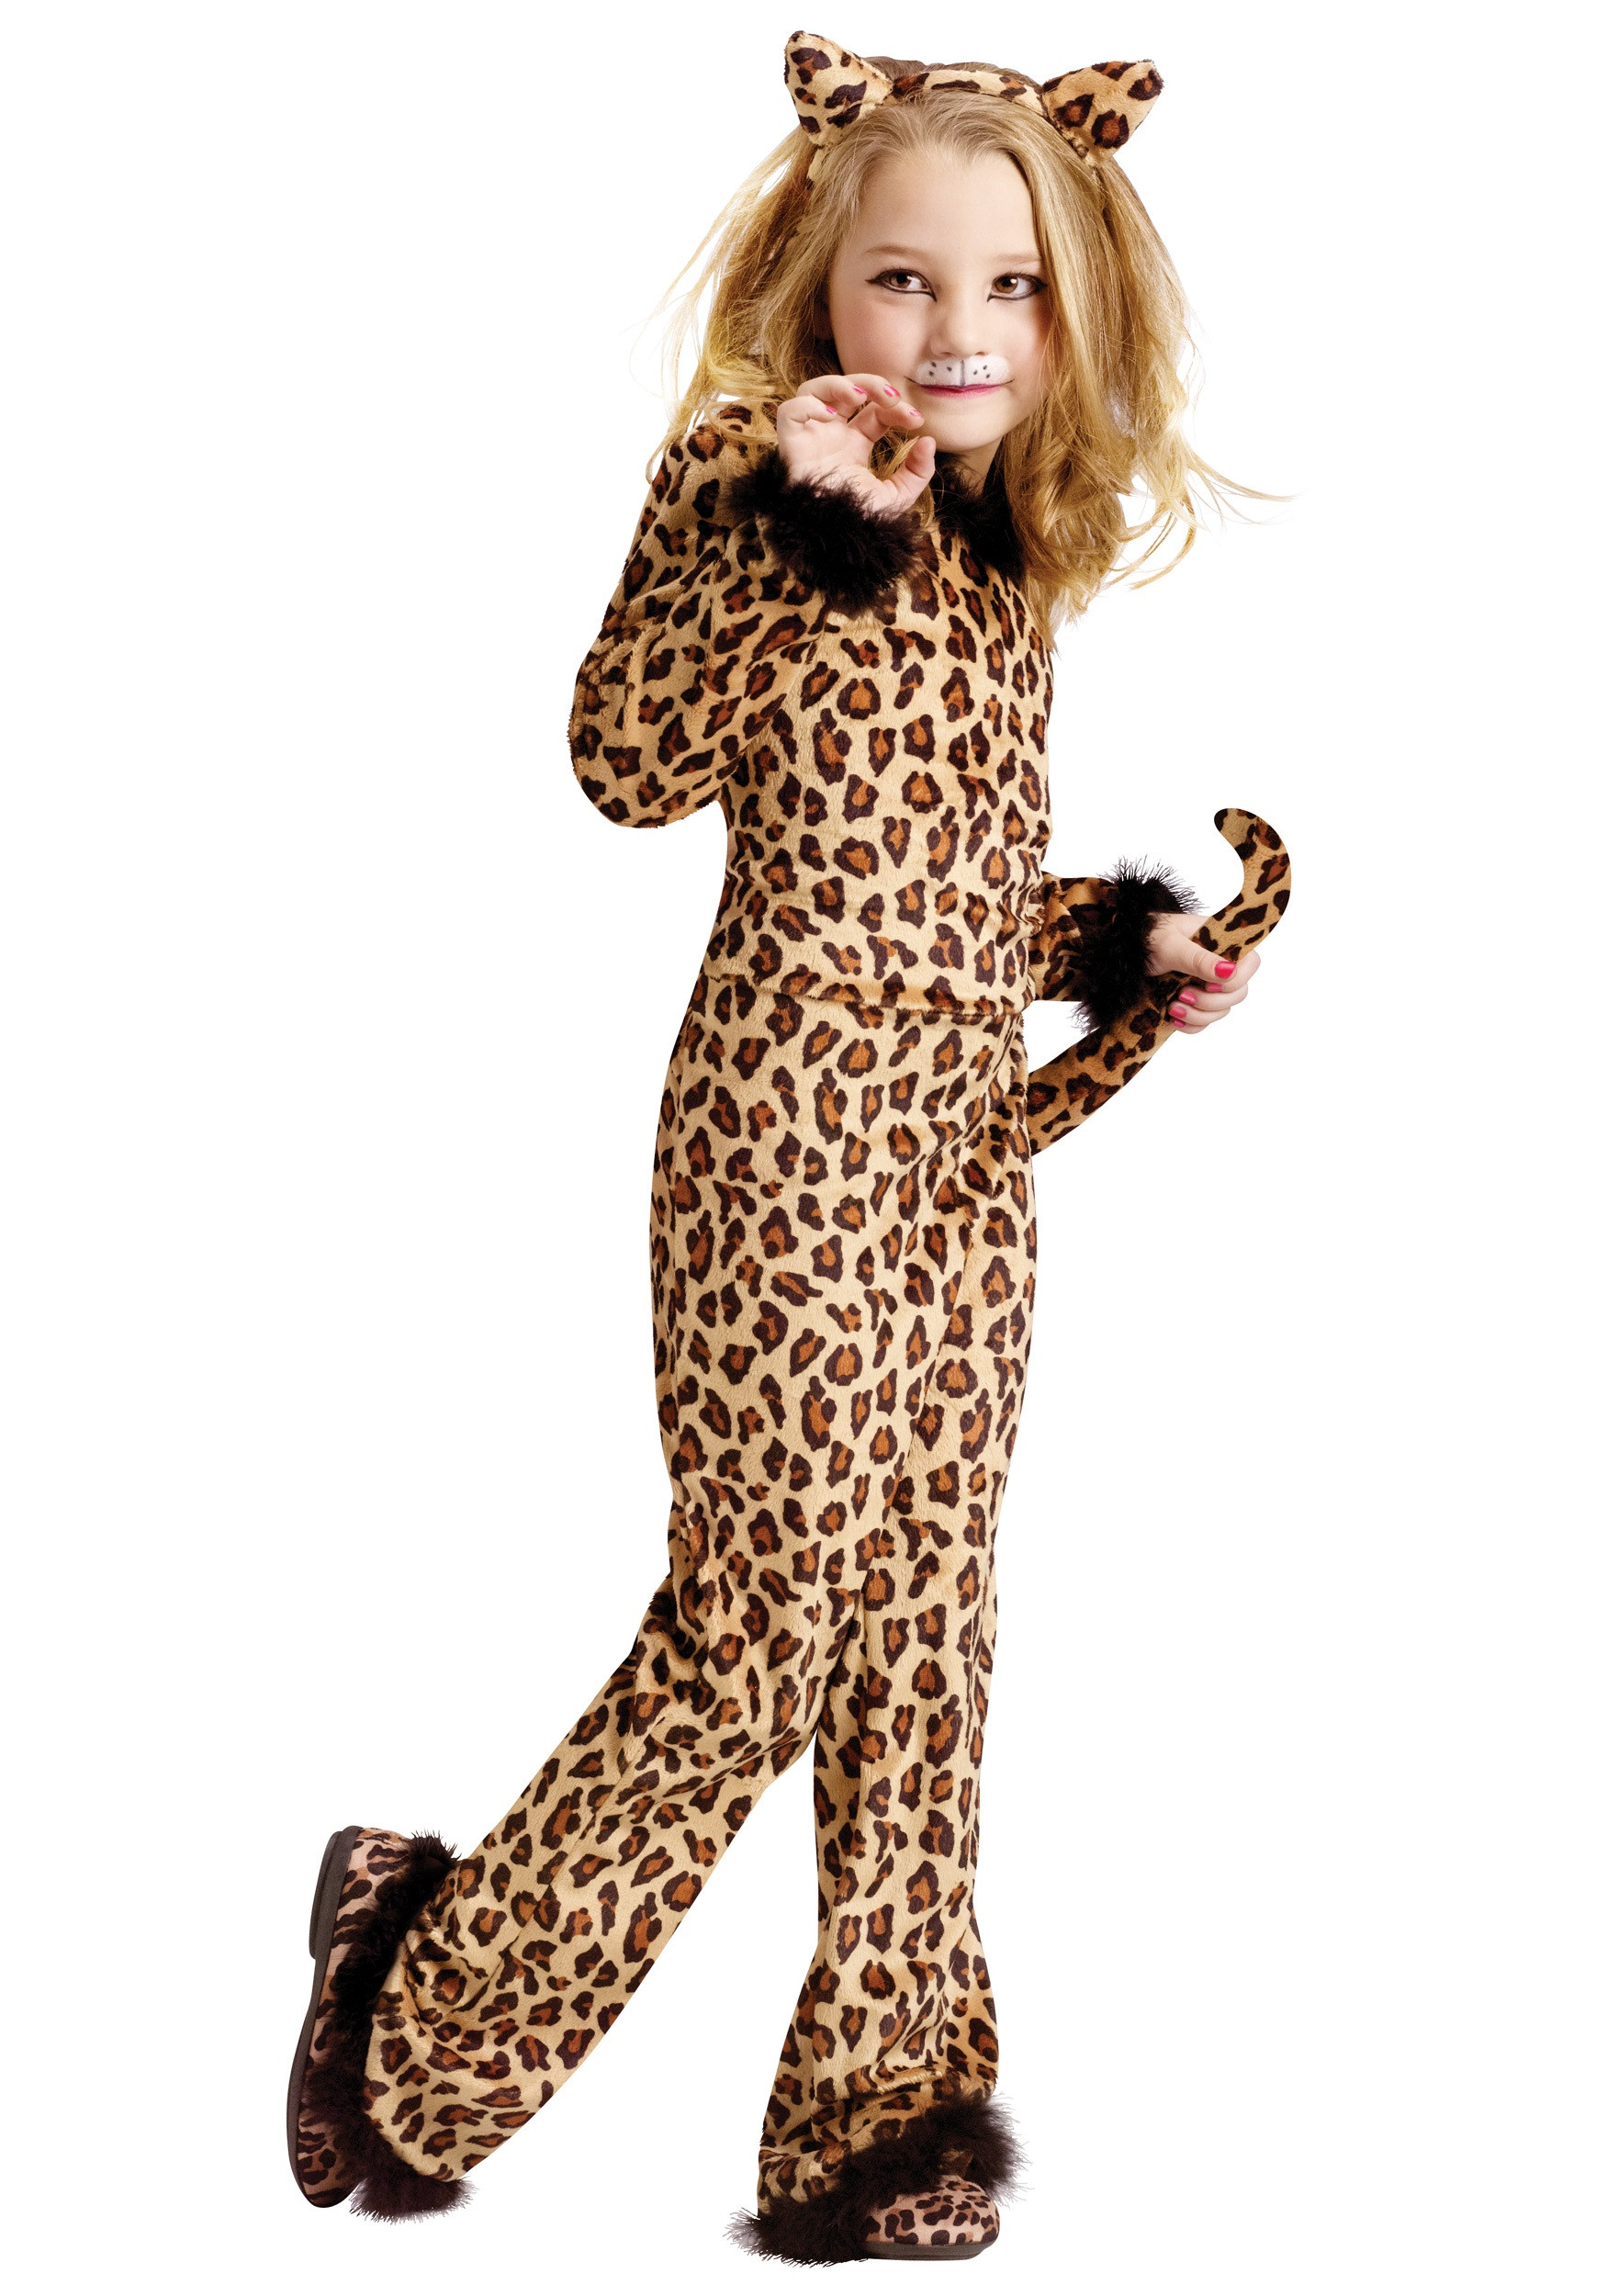 Leopard Costume DIY
 Child Pretty Leopard Costume